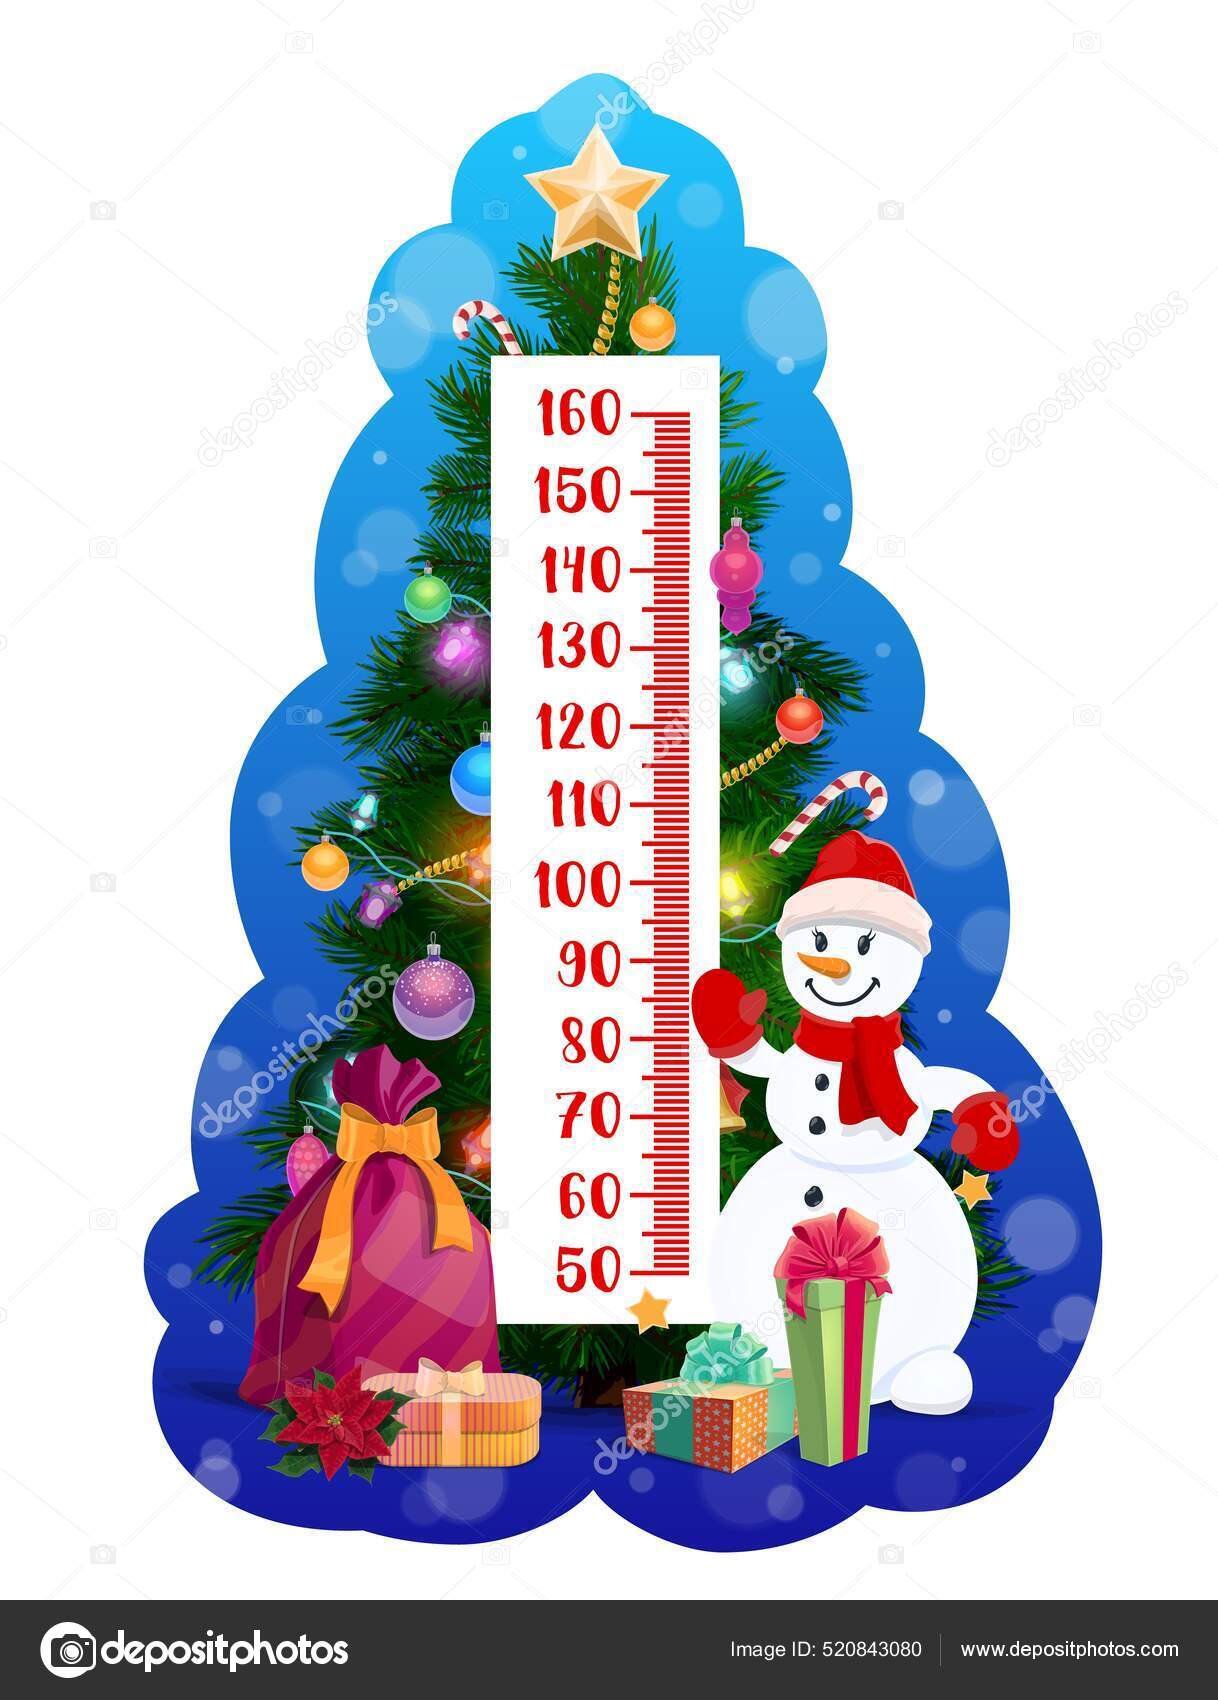 https://st.depositphotos.com/1020070/52084/v/1600/depositphotos_520843080-stock-illustration-kids-height-chart-cartoon-christmas.jpg